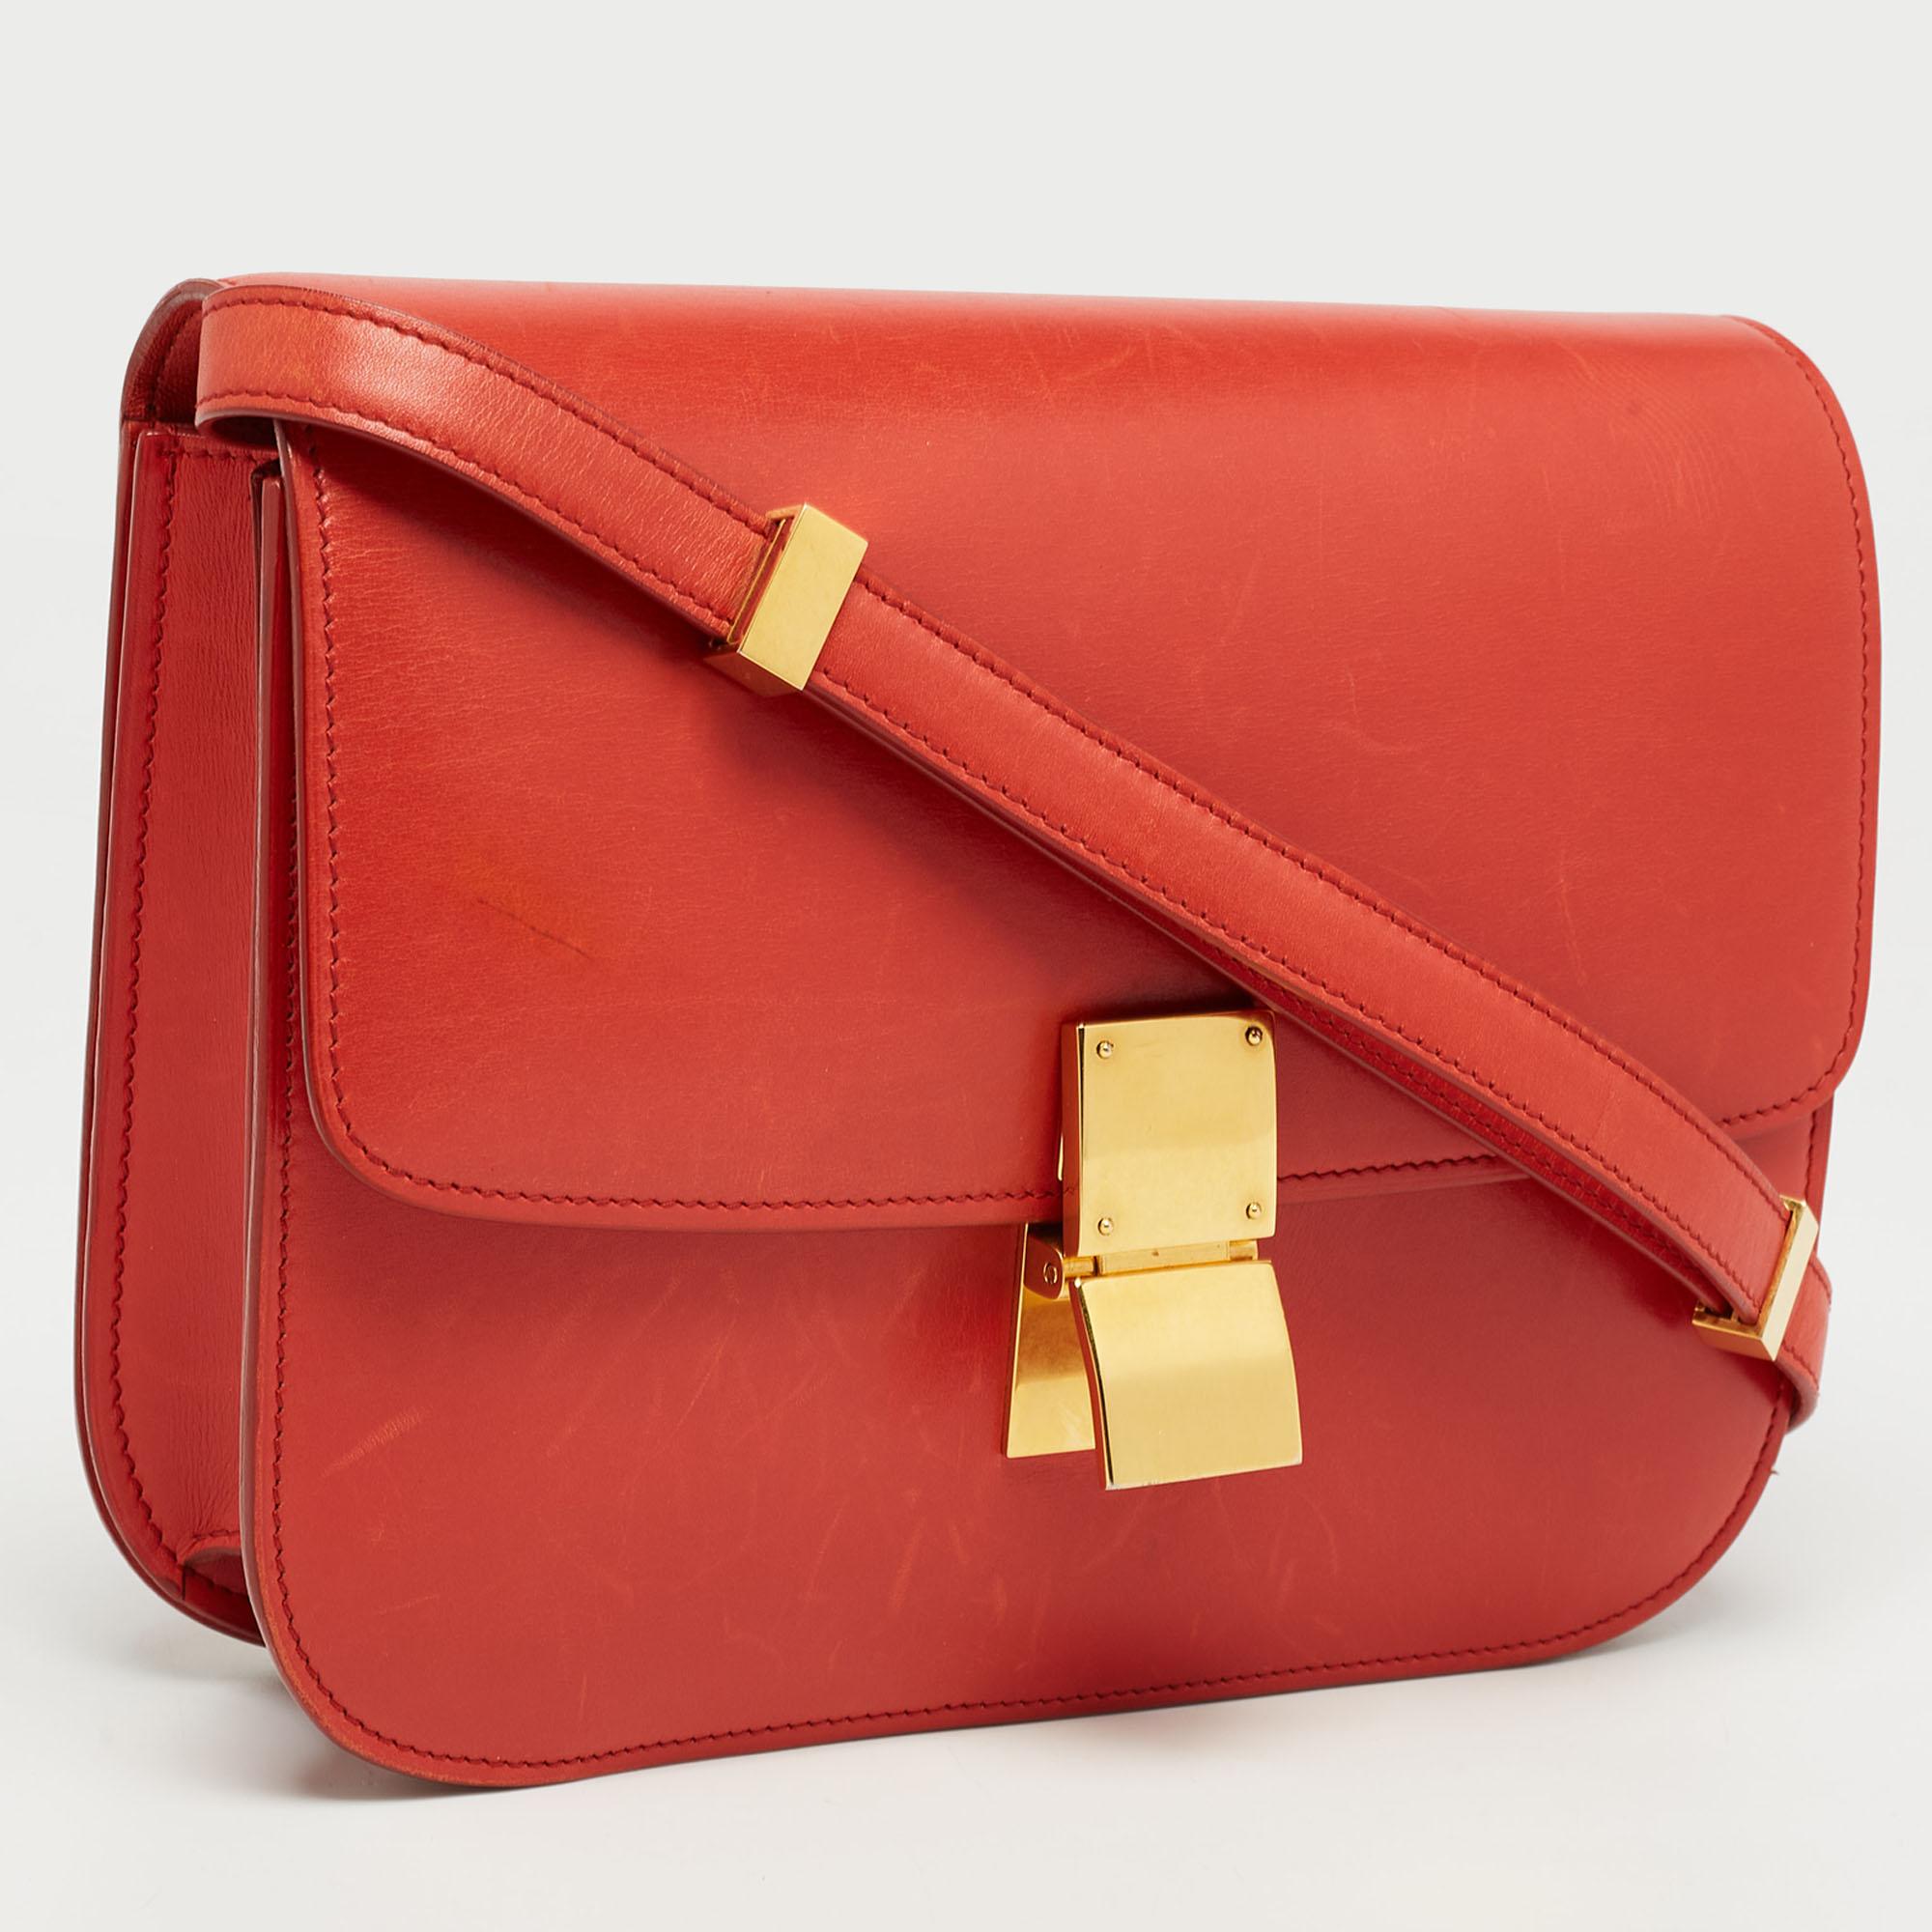 Celine Coral Red Leather Medium Classic Box Shoulder Bag In Good Condition For Sale In Dubai, Al Qouz 2